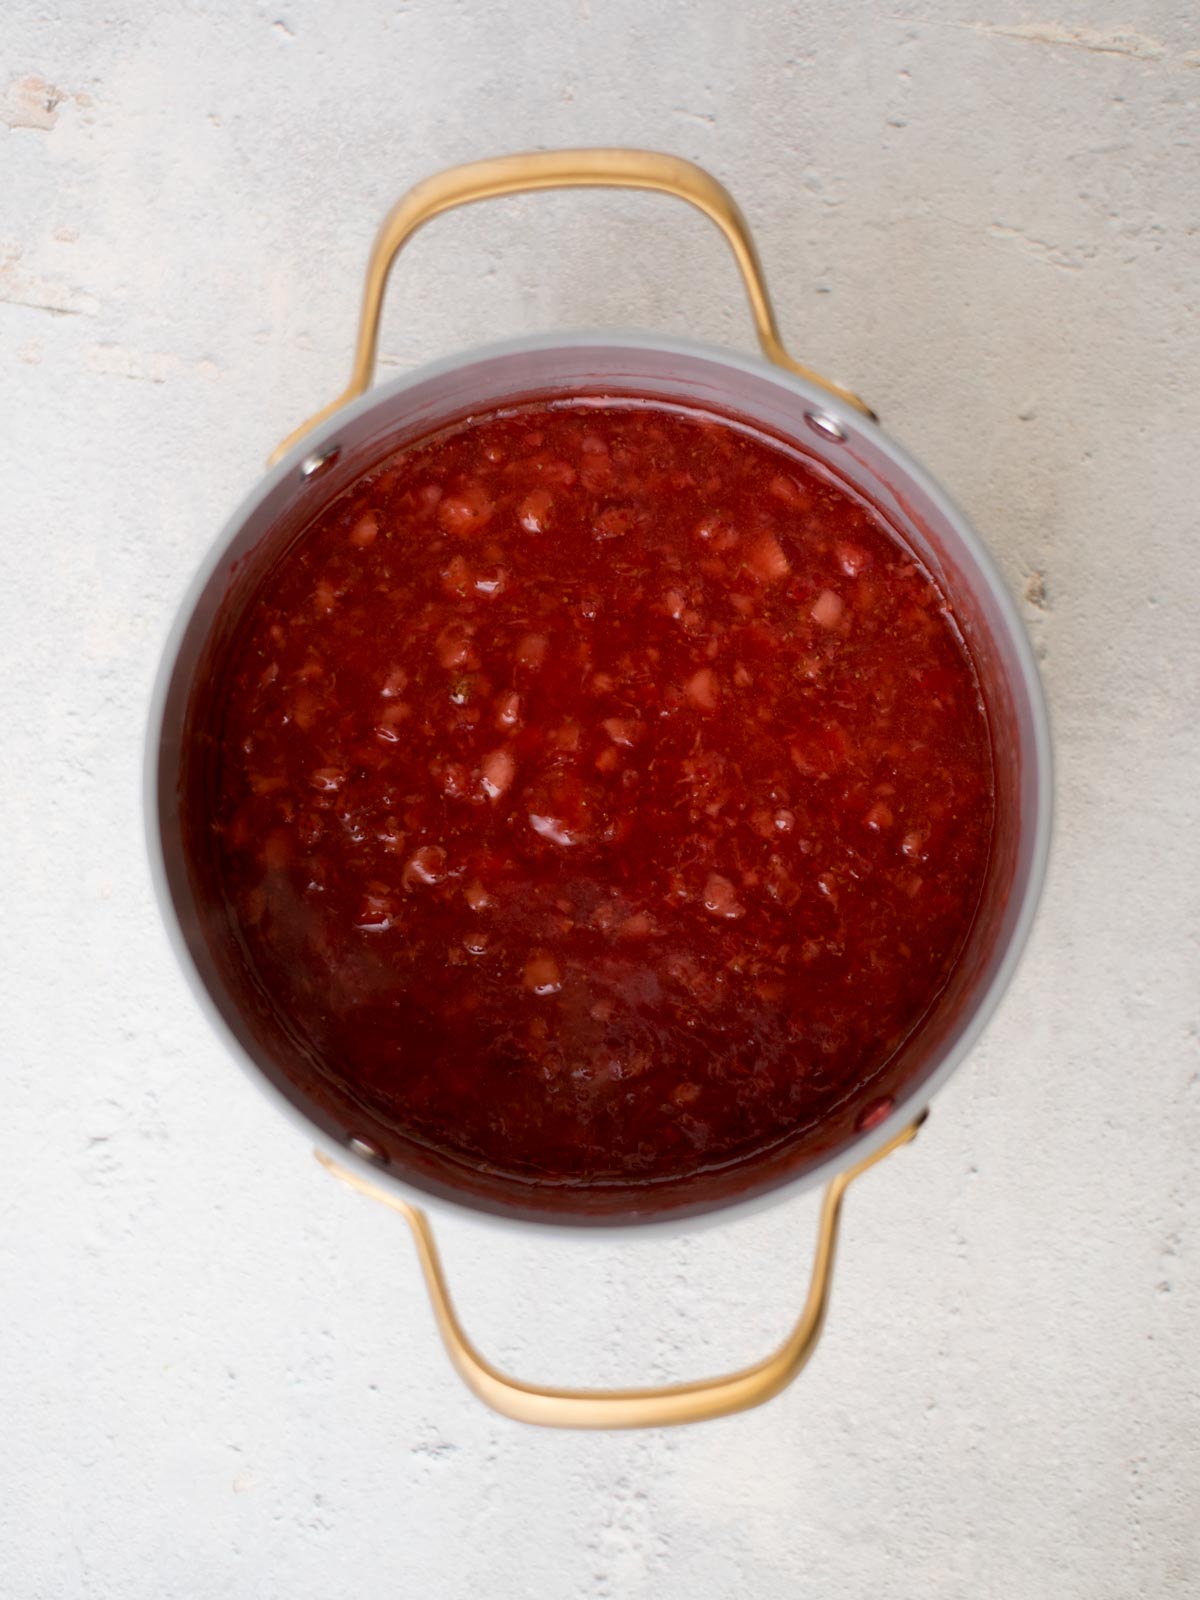 strawberry pie jam filling in a saucepan